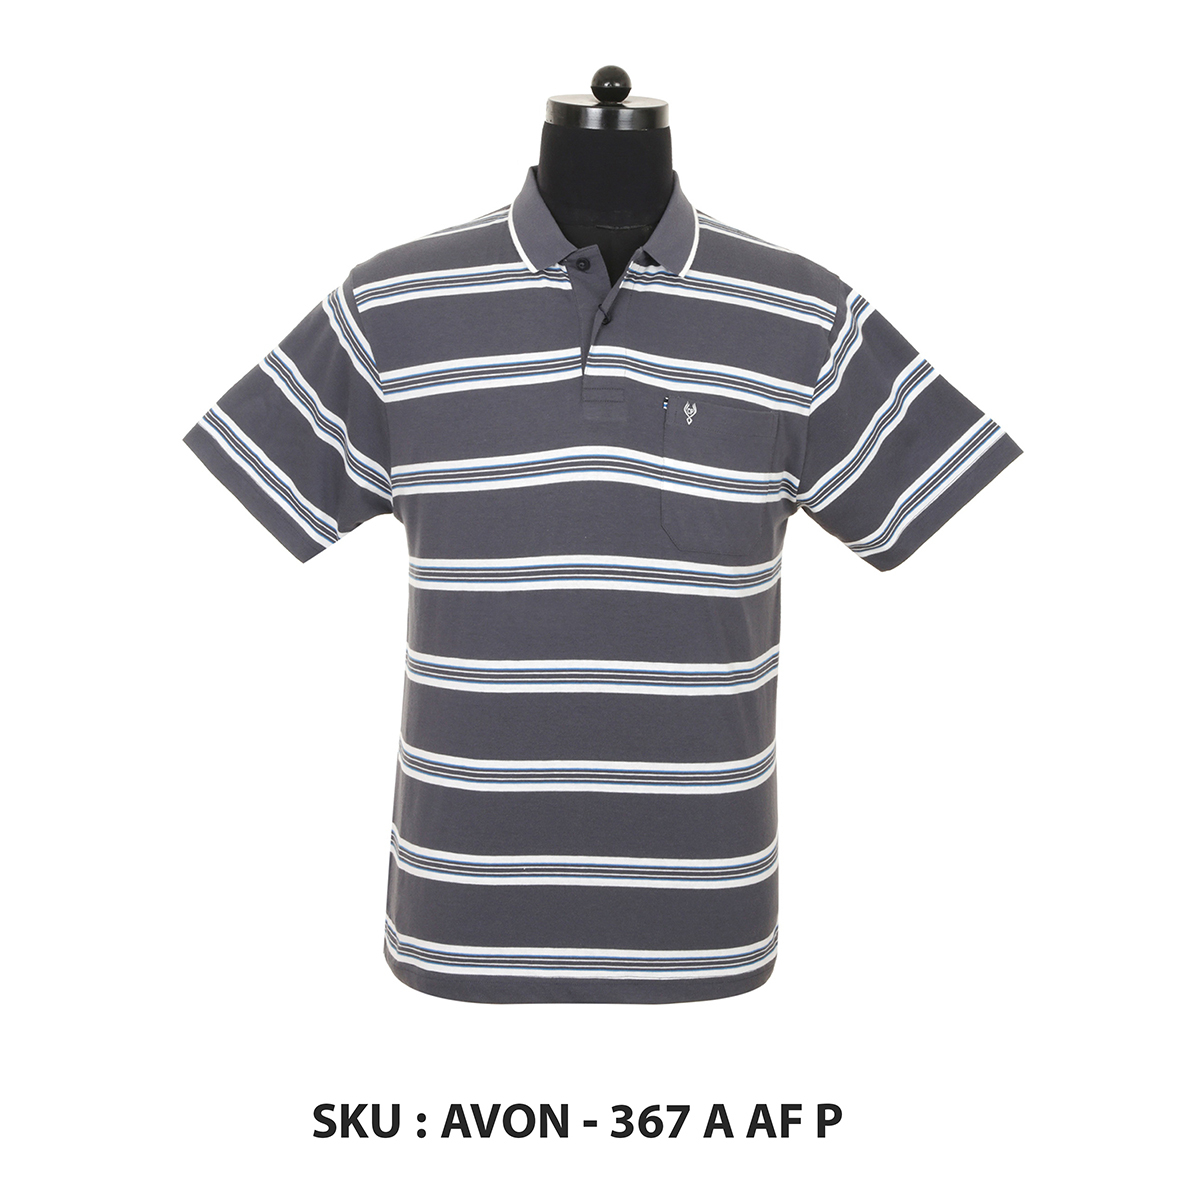 Classic Polo Mens T Shirt Avon - 367 A Af P Grey S